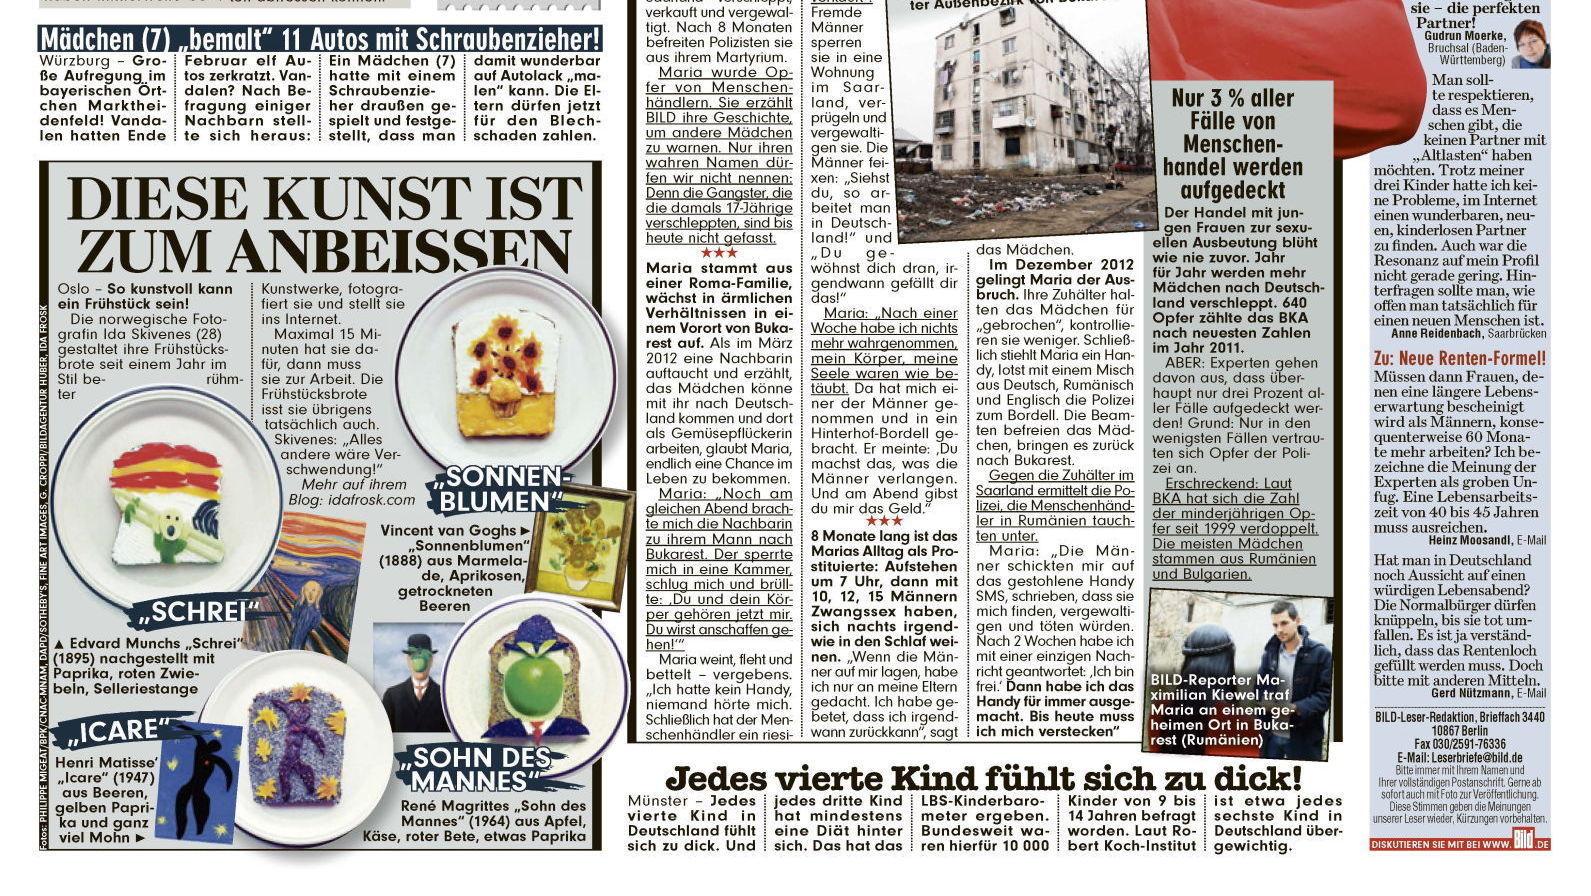 EUROPAS STØRSTE AVIS:Tyske Bild Zeitung viet plass til Idas norske brødskiver 7. mars 2013. Foto: Faksimile